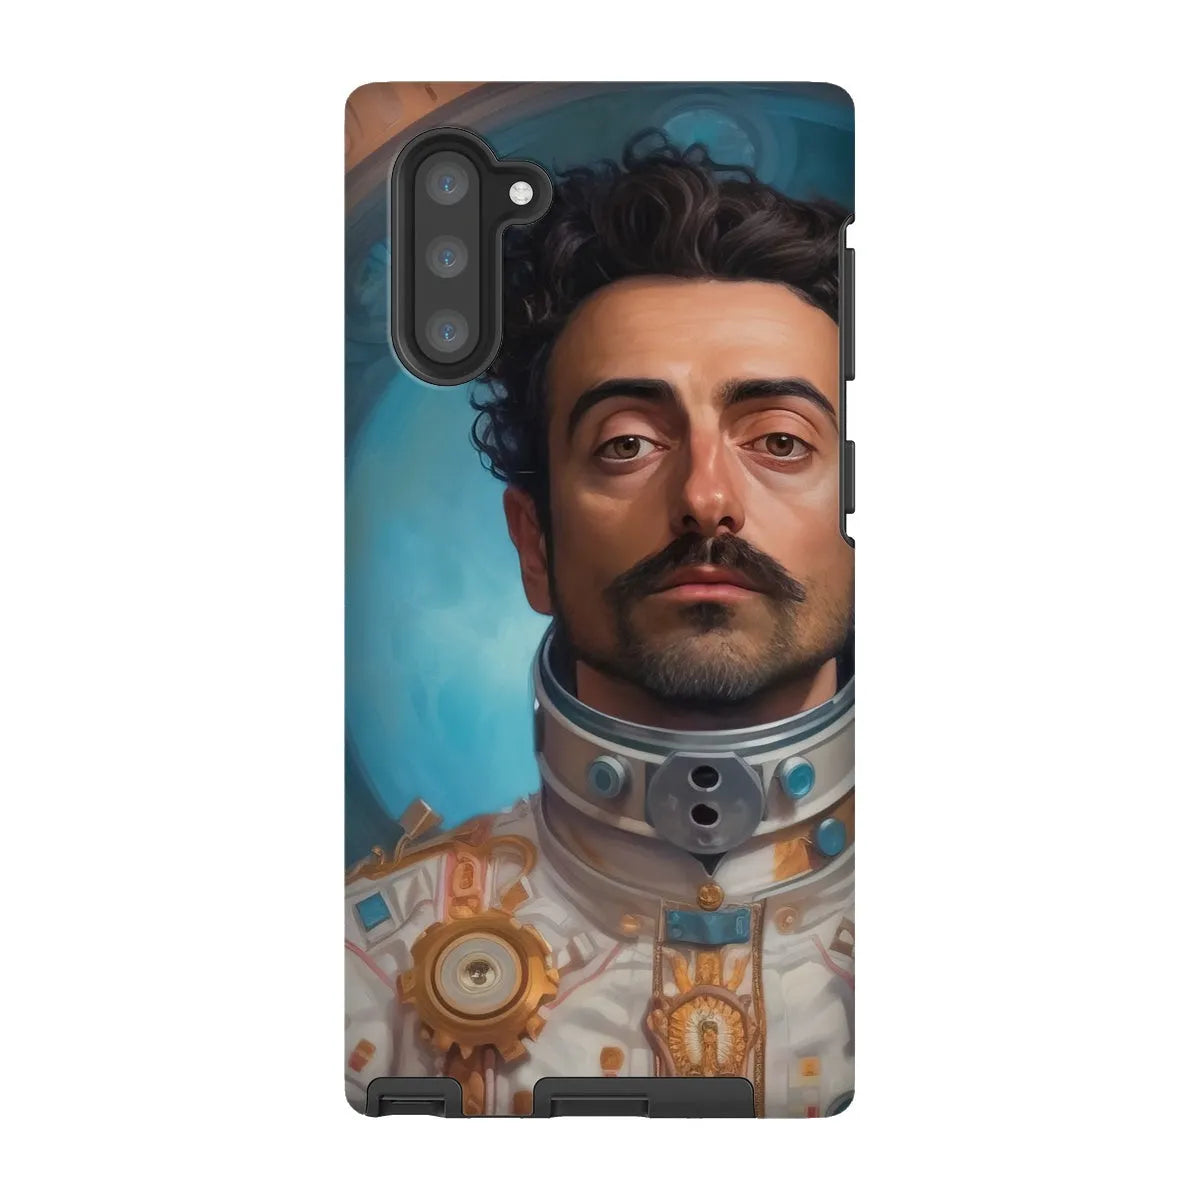 Eskandar The Gay Astronaut - Gay Aesthetic Art Phone Case - Samsung Galaxy Note 10 / Matte - Mobile Phone Cases